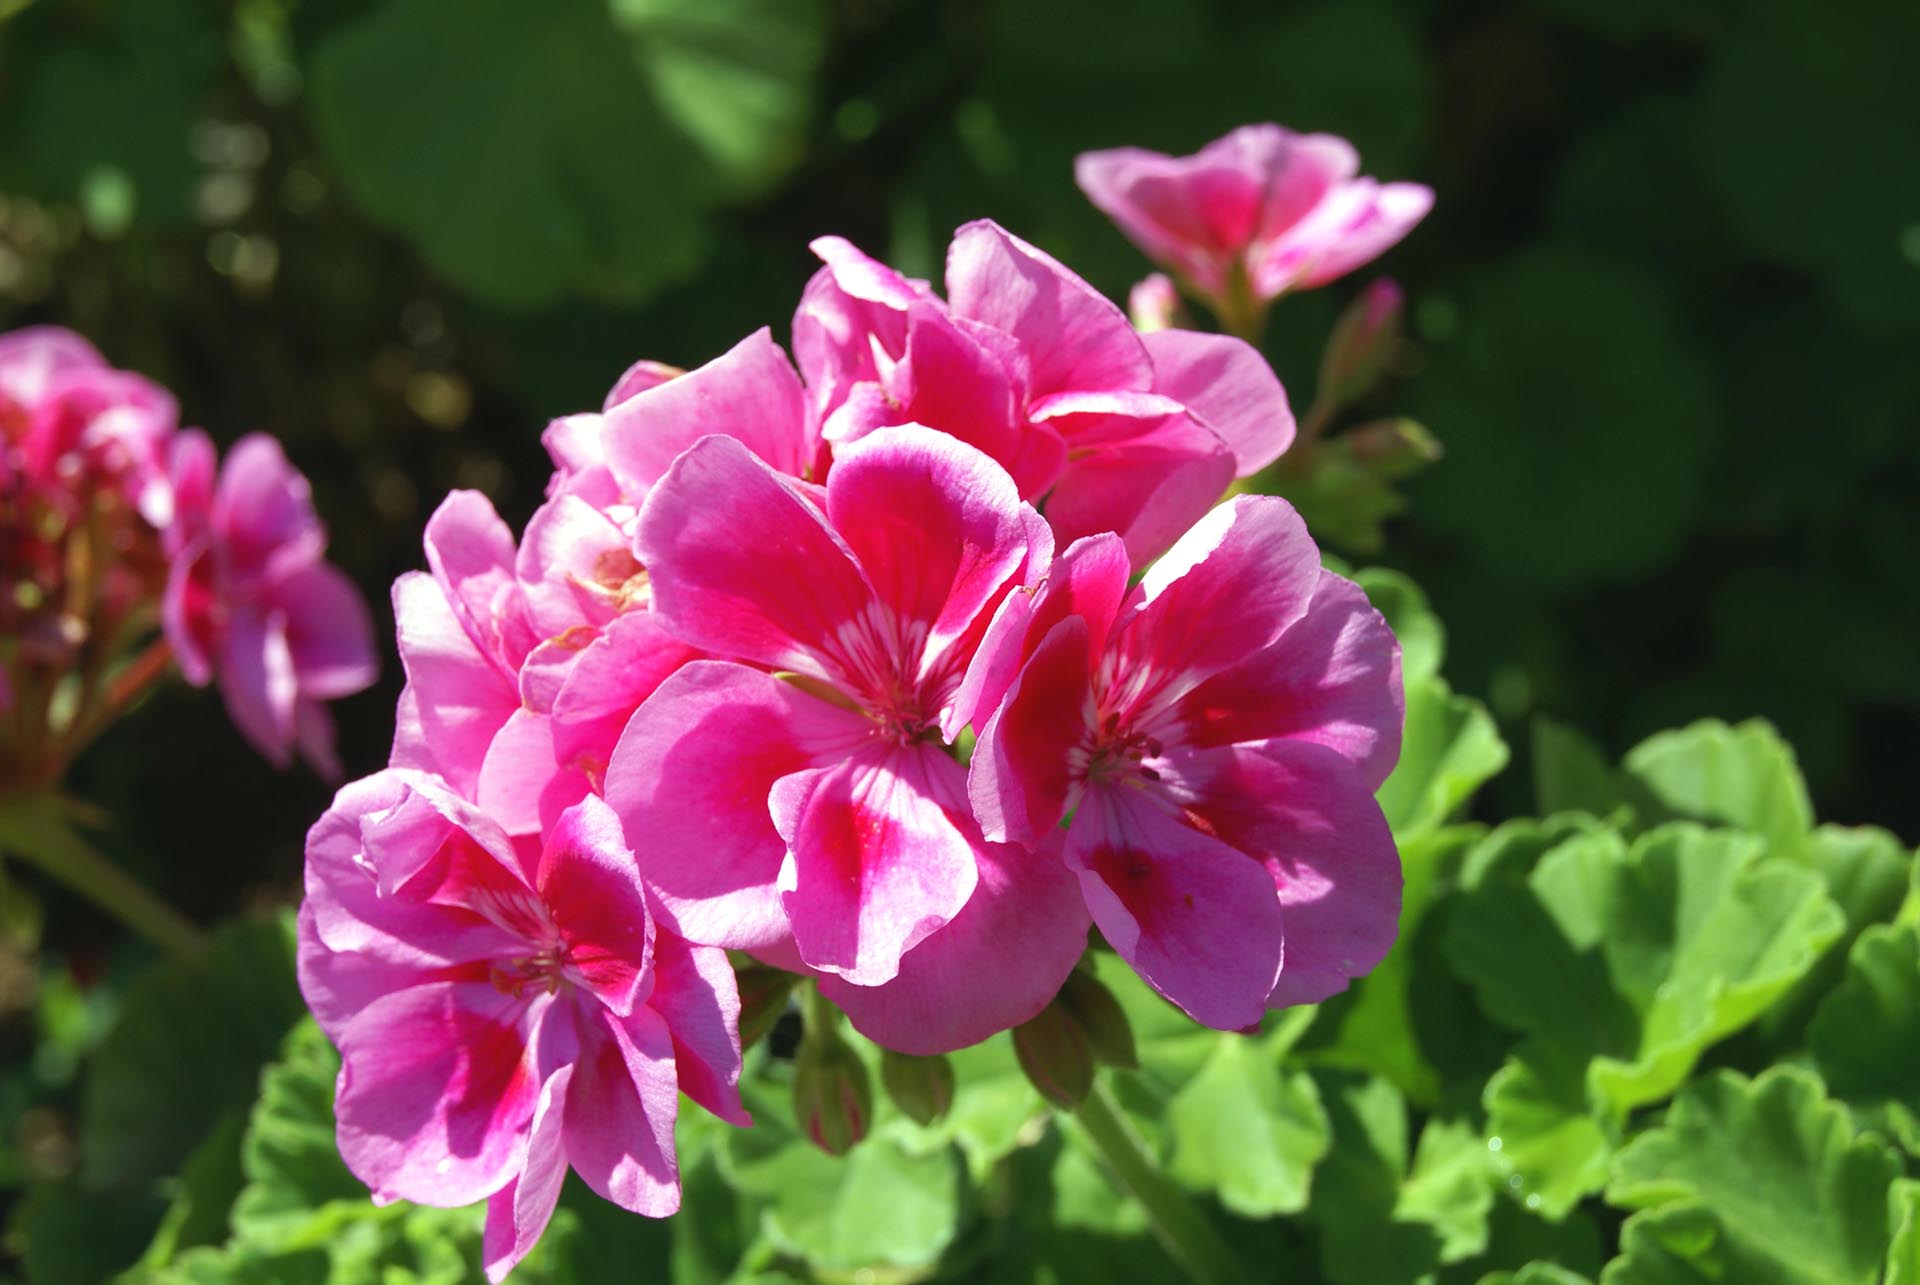 A pink geranium.